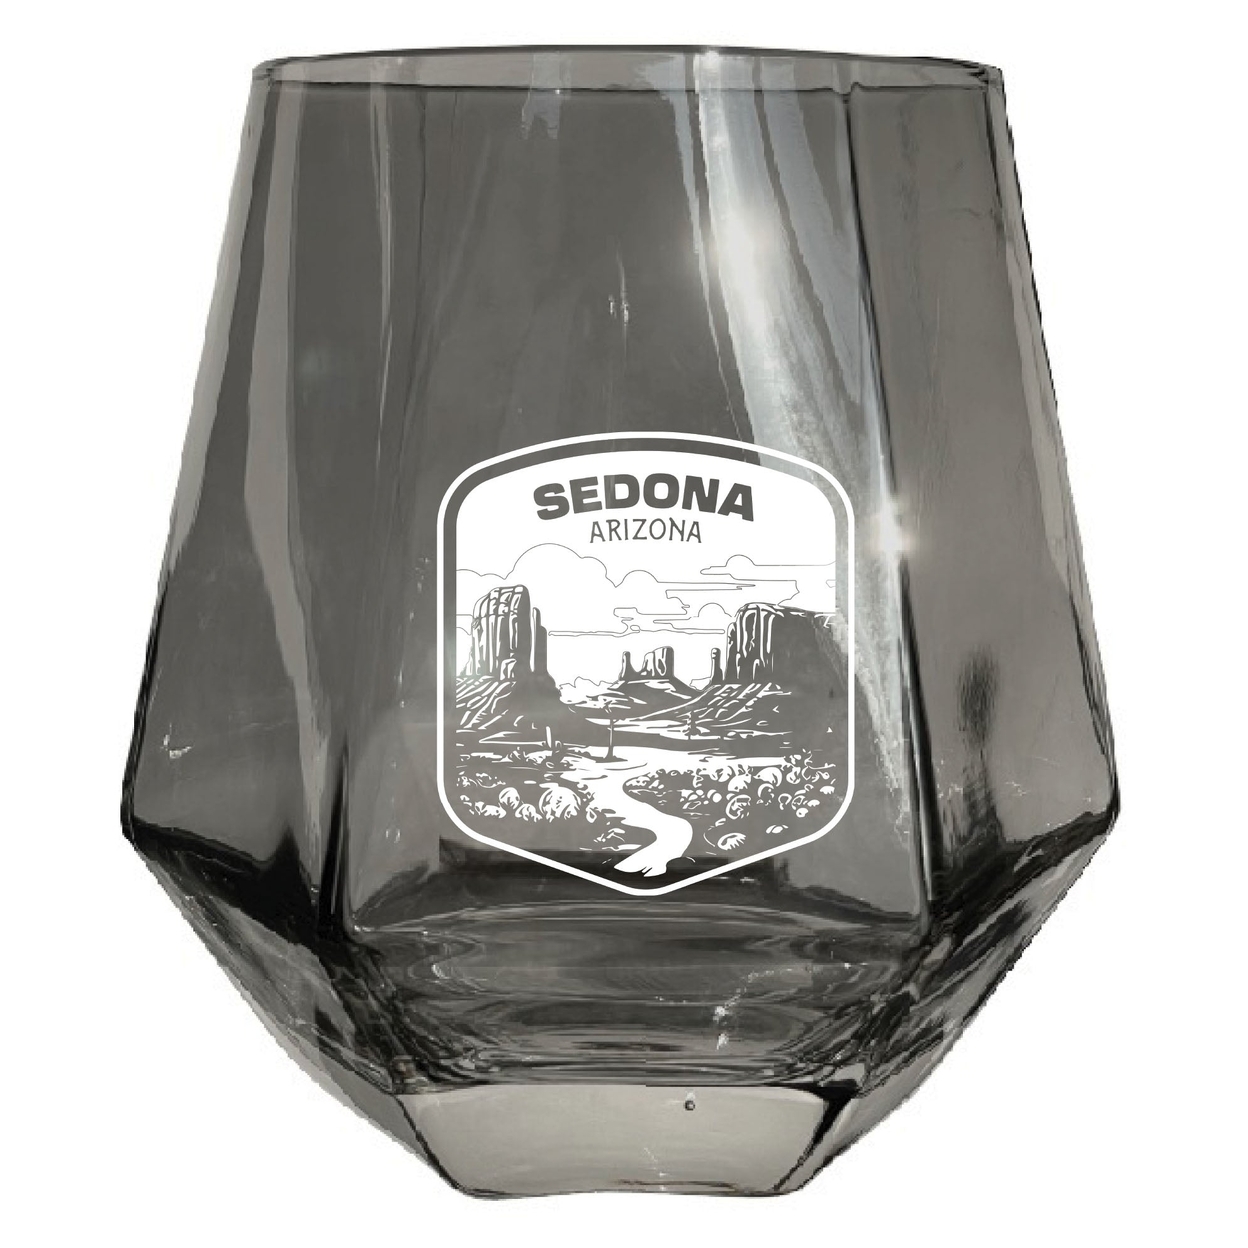 Sedona Arizona Souvenir Wine Glass EngravedDiamond 15 Oz Clear Iridescent - Gray,,Single Unit